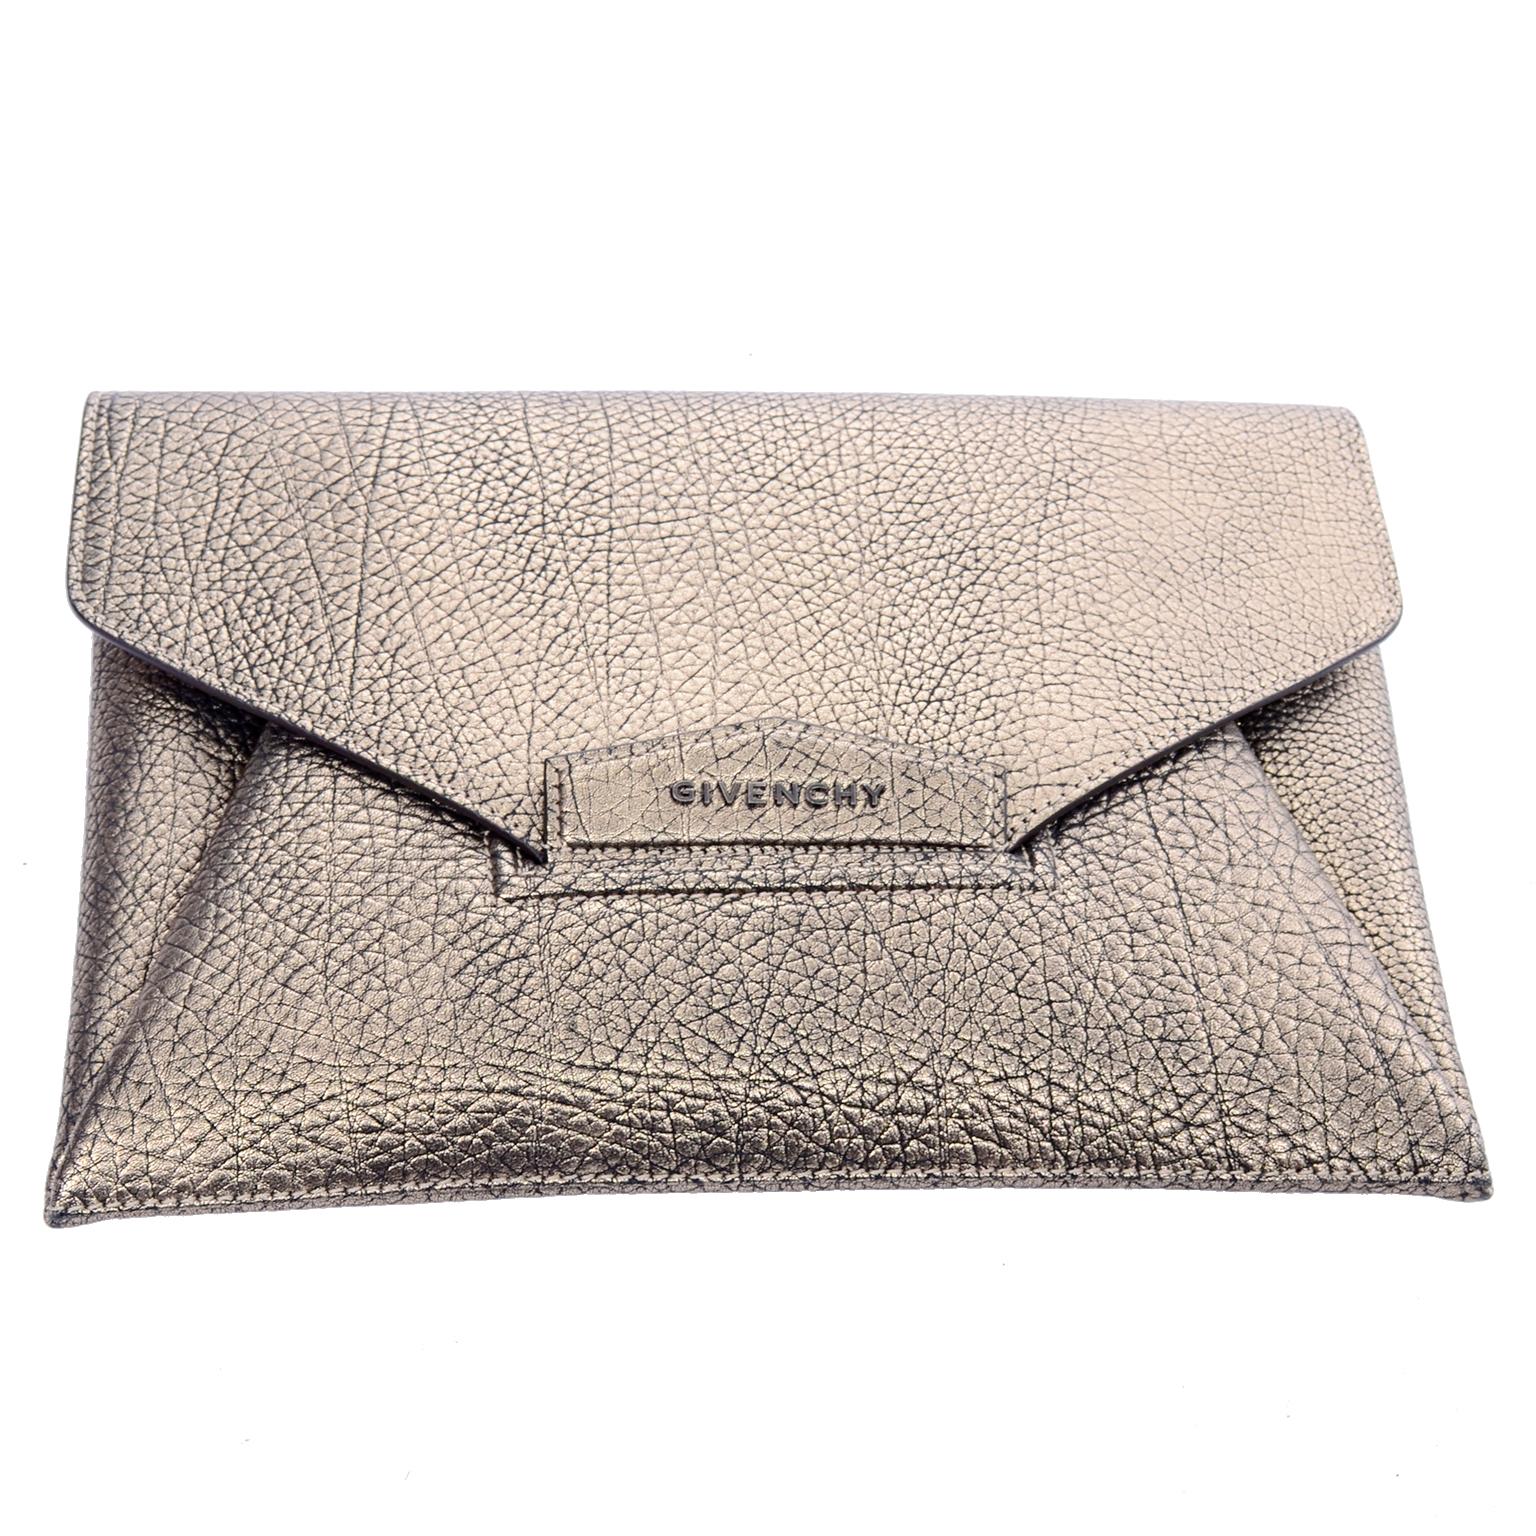 Givenchy Envelope Clutch Medium Antigona Goat Leather Handbag in Bronze Metallic